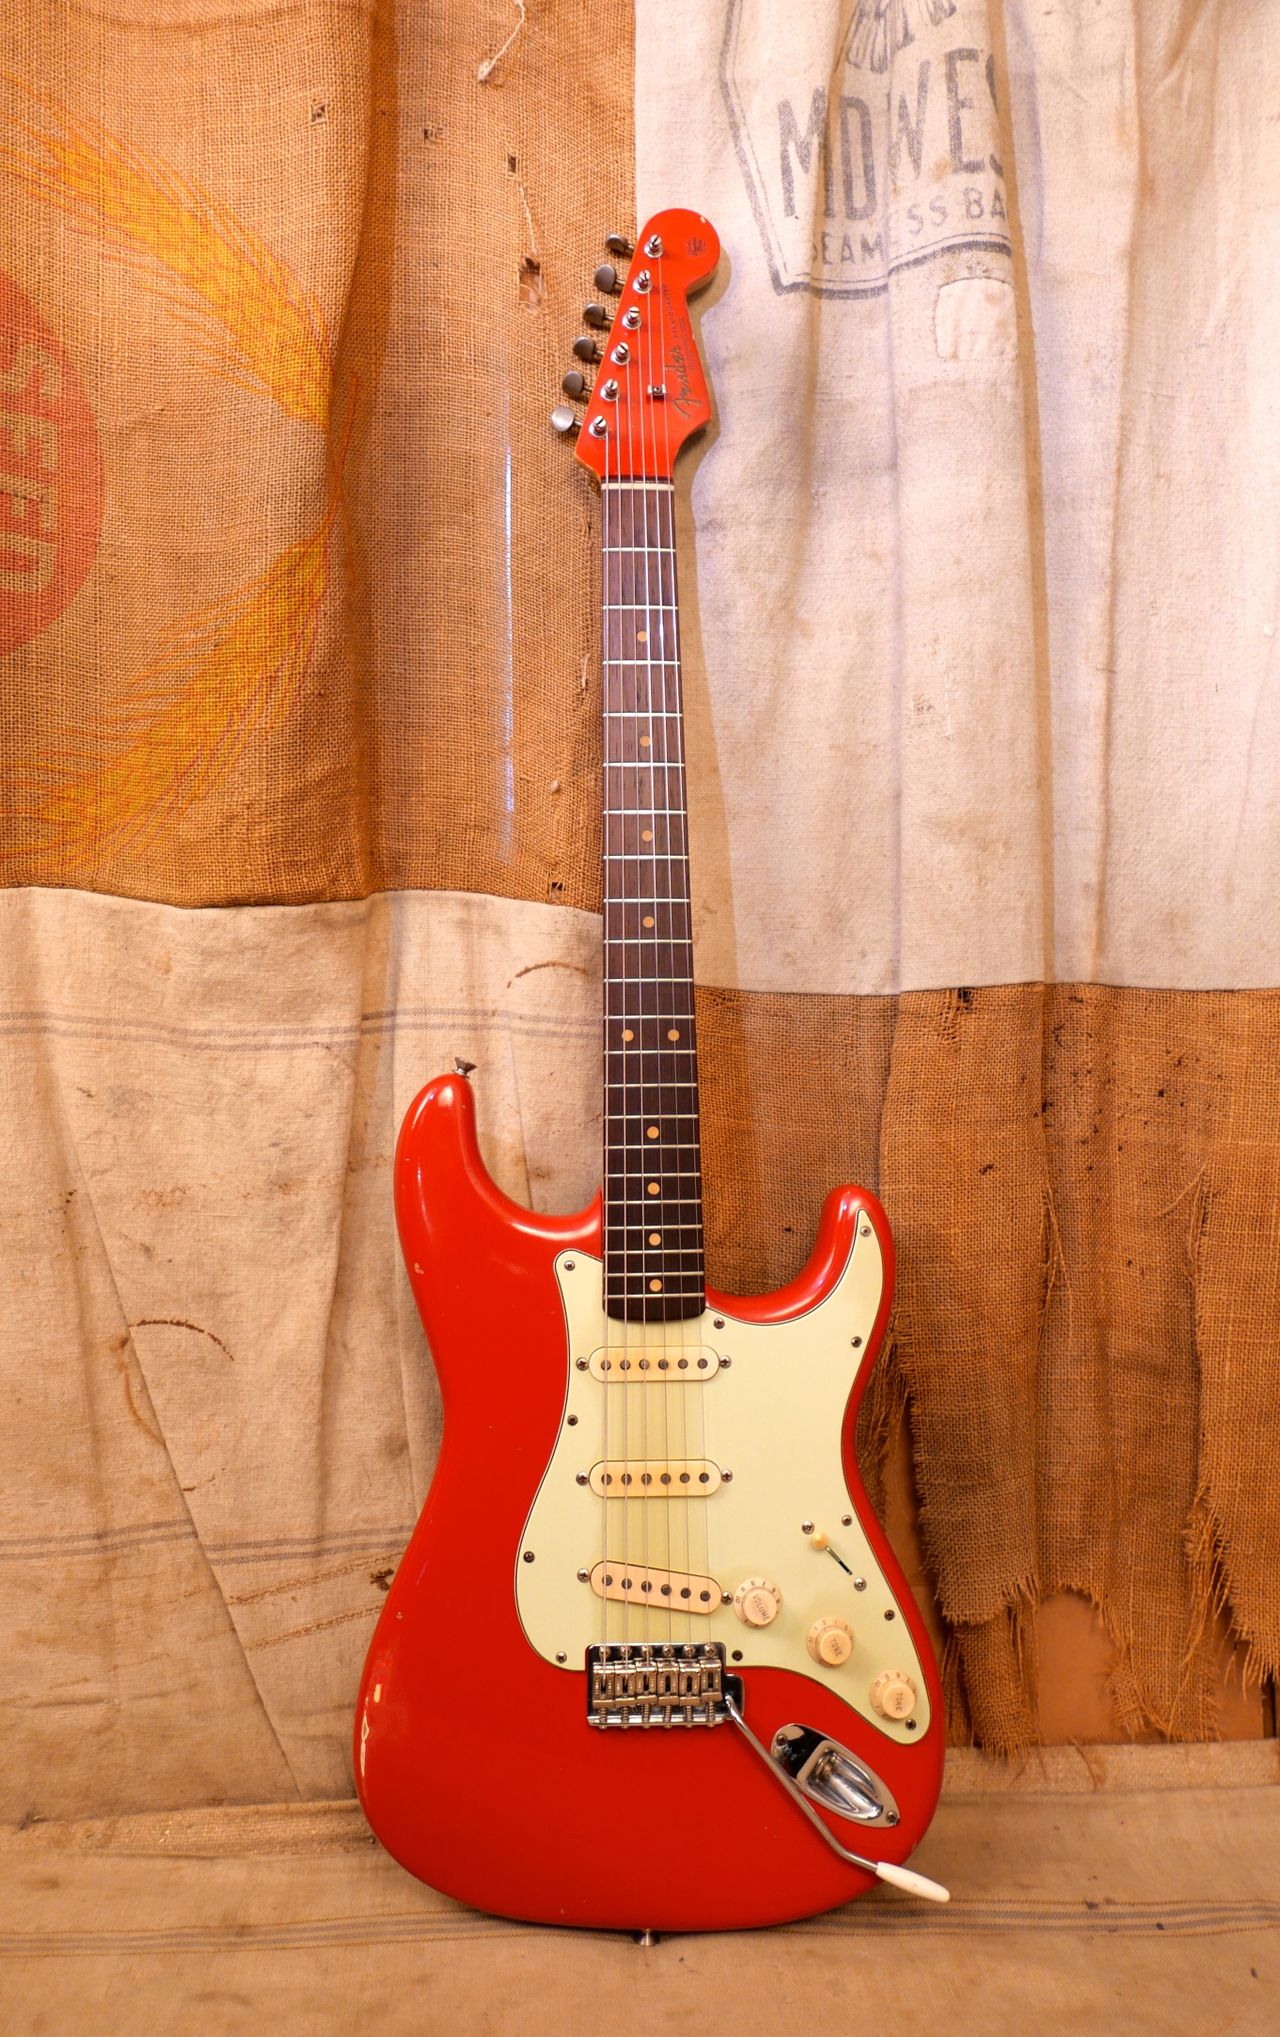 Armada Mareo Villano Fender Stratocaster 1962 Red - Refin | Carter Vintage Guitars